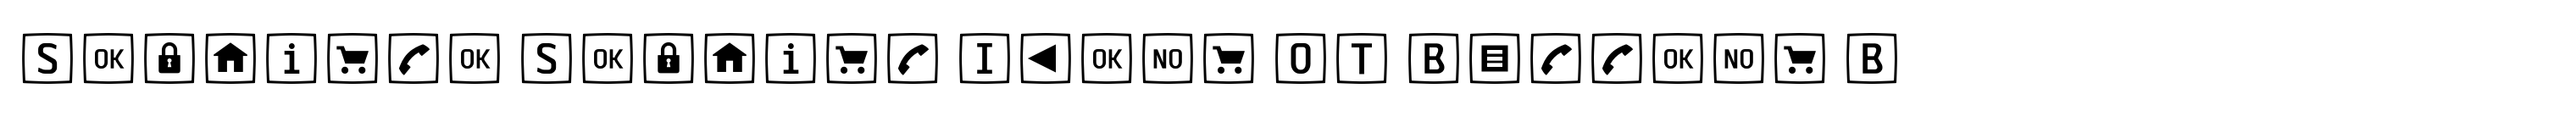 Sophisto Sophist Icons OT Buttons B